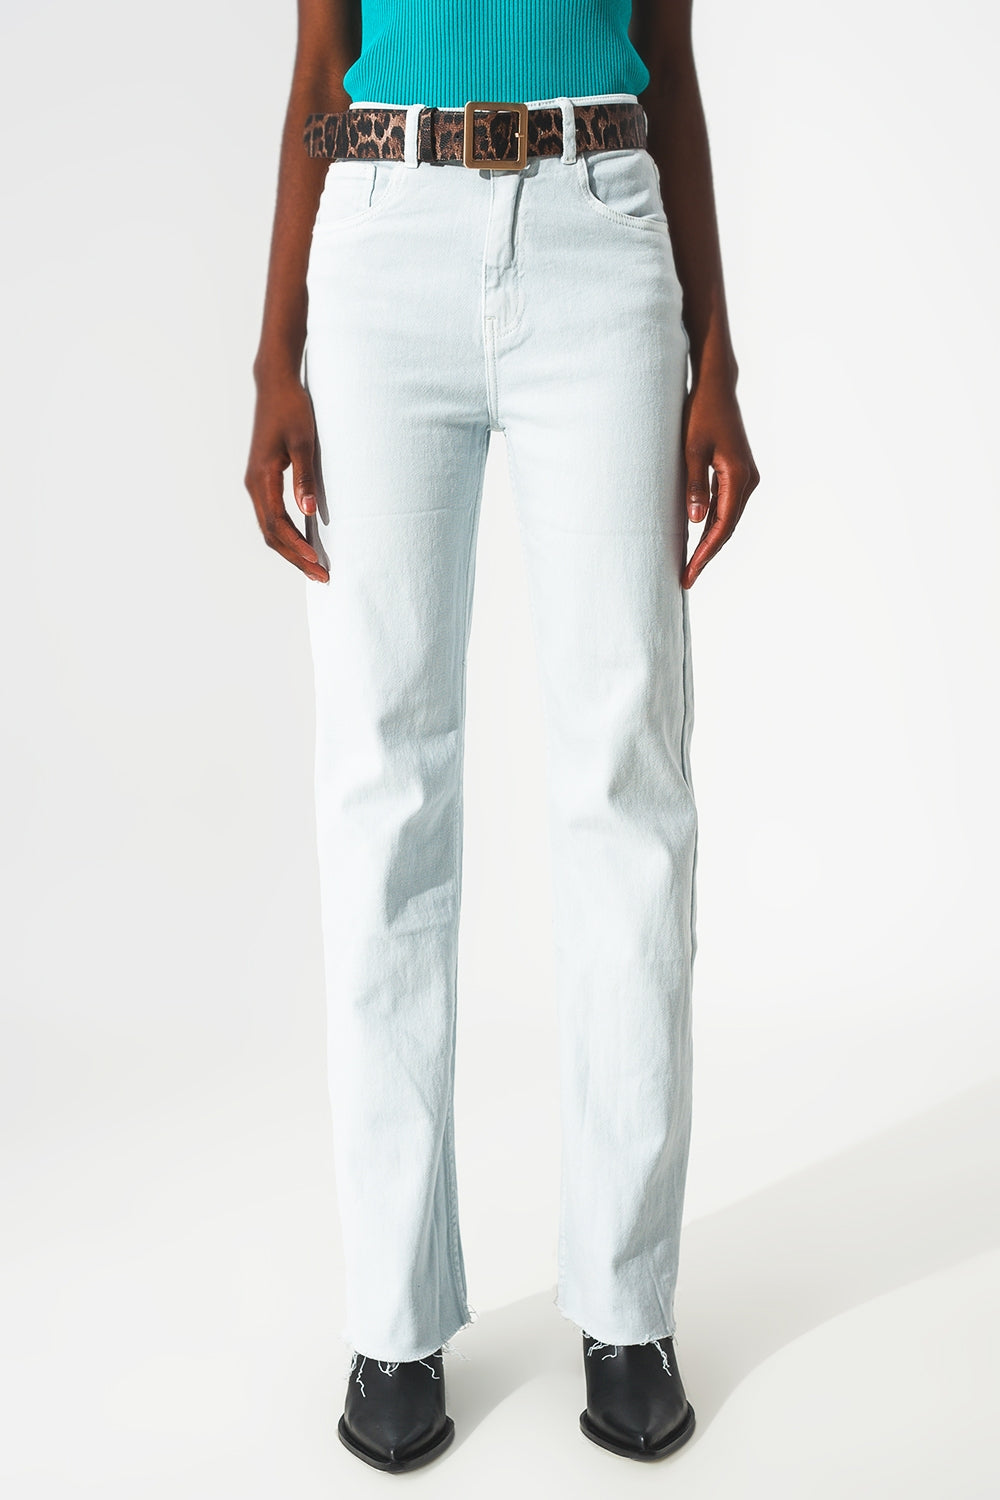 Elastic Cotton jeans in light blue - Szua Store